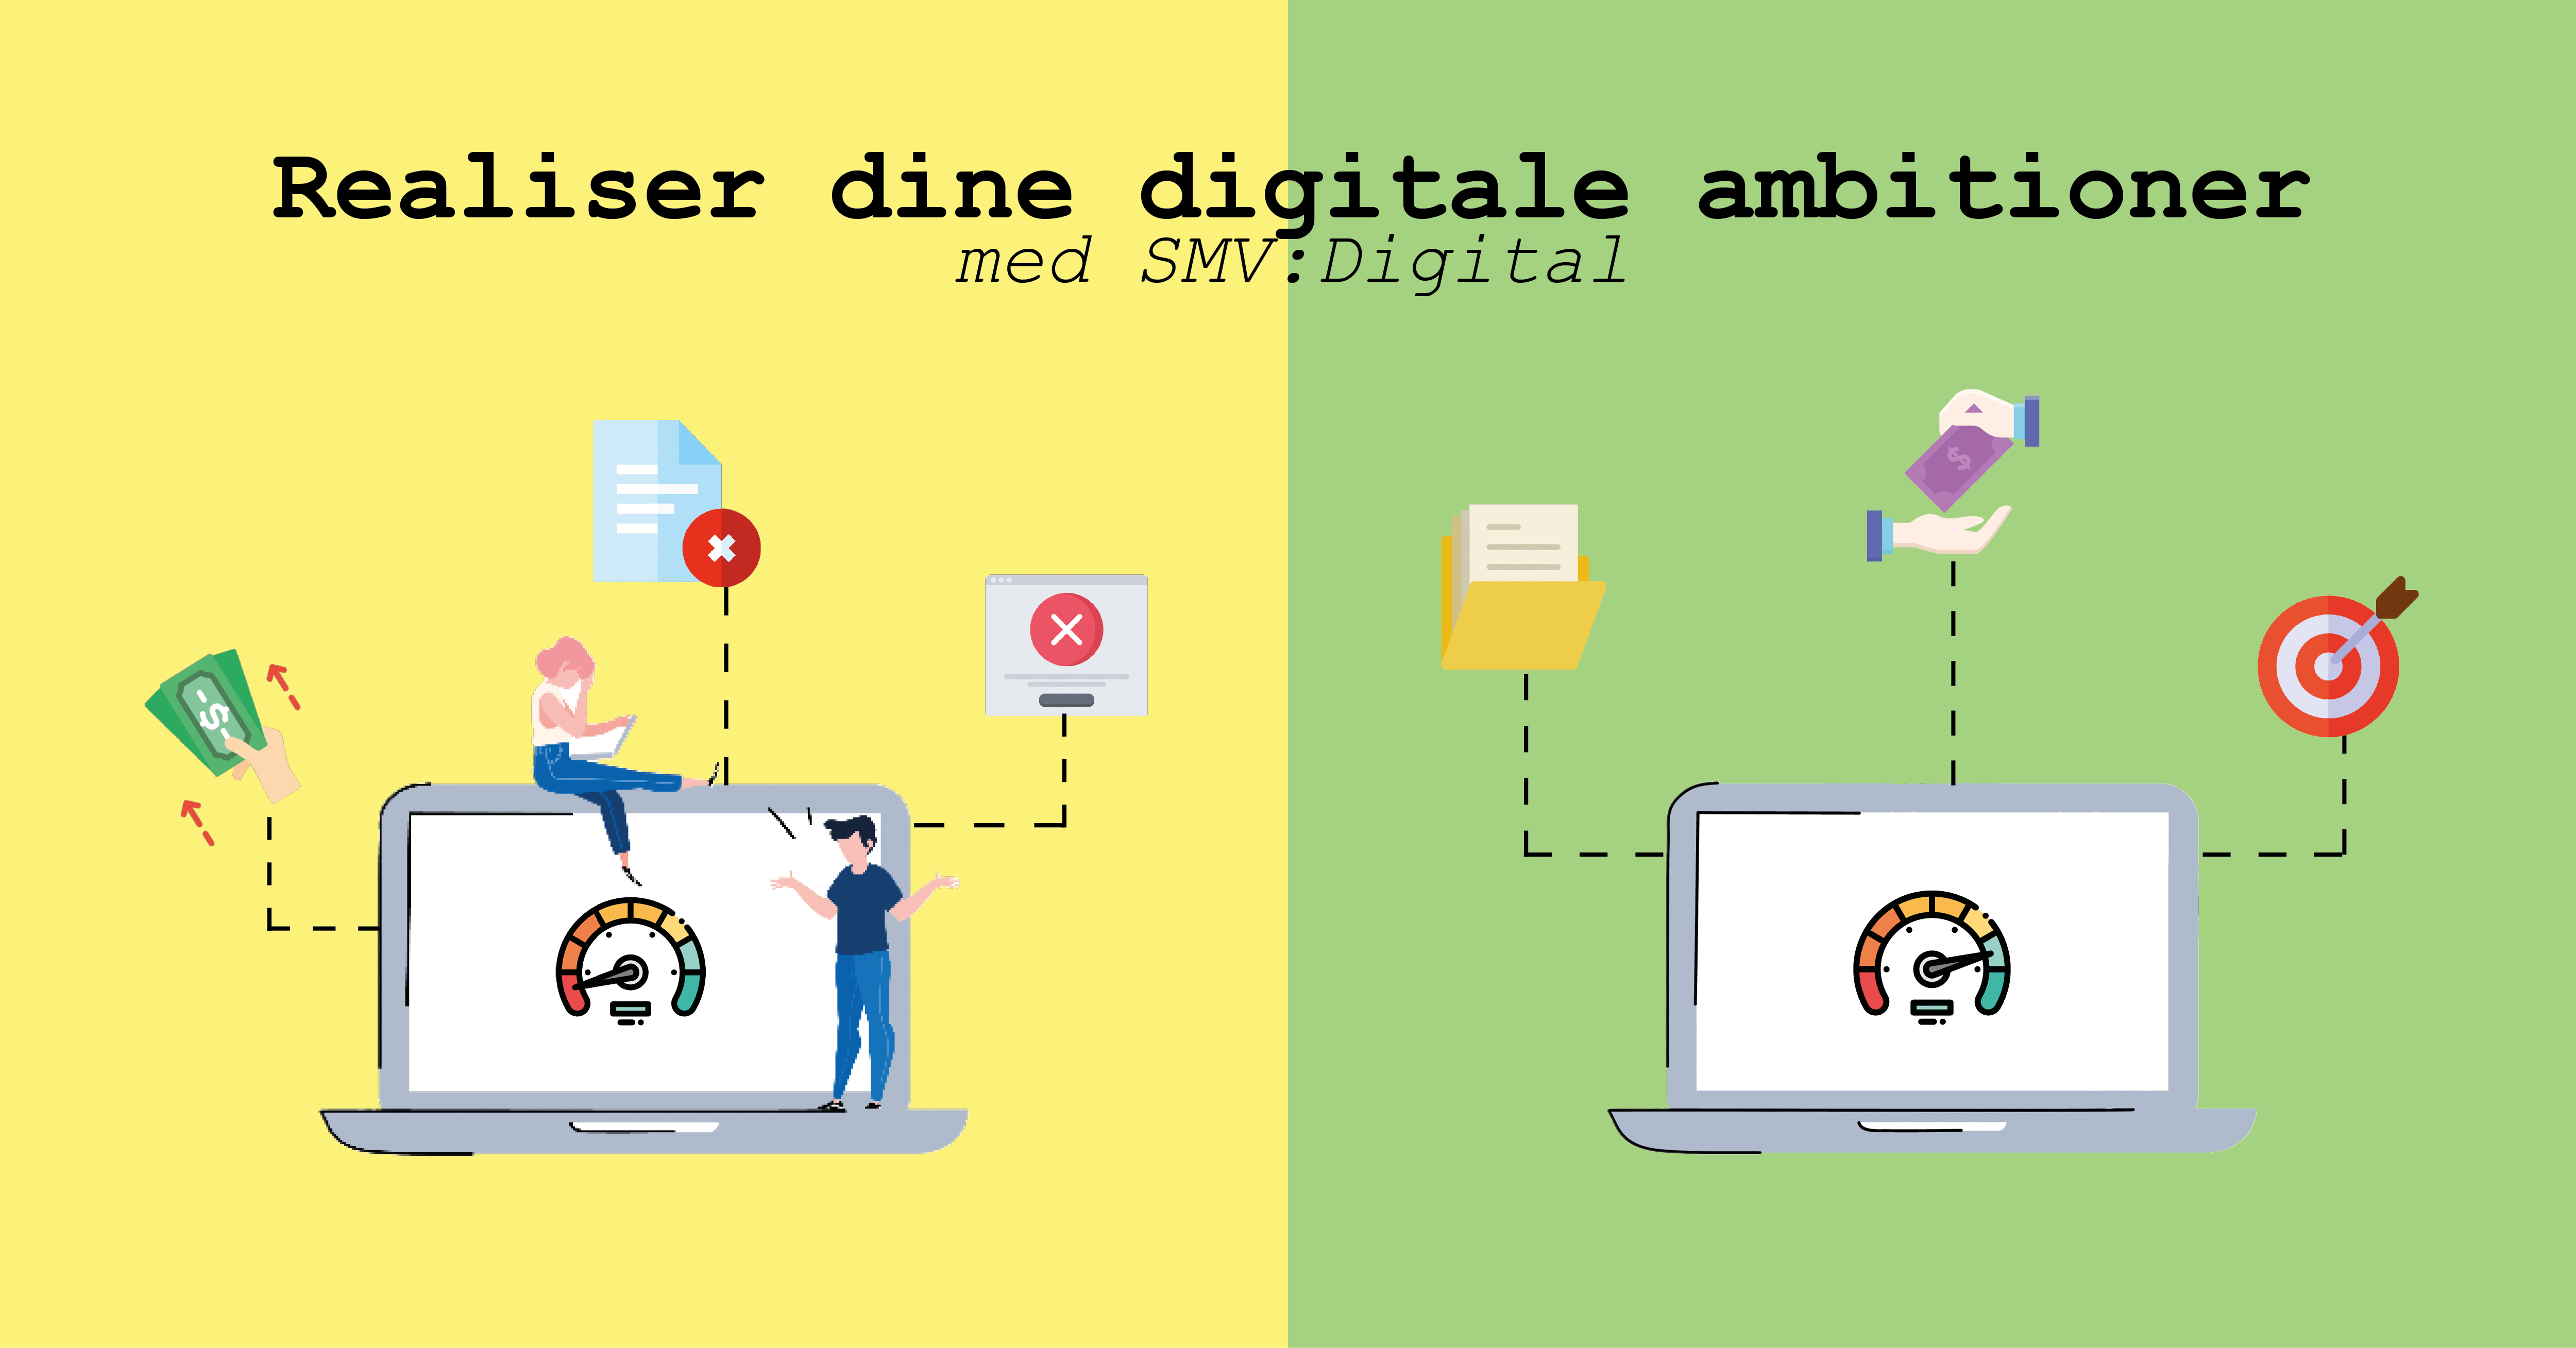 SMV:Digital